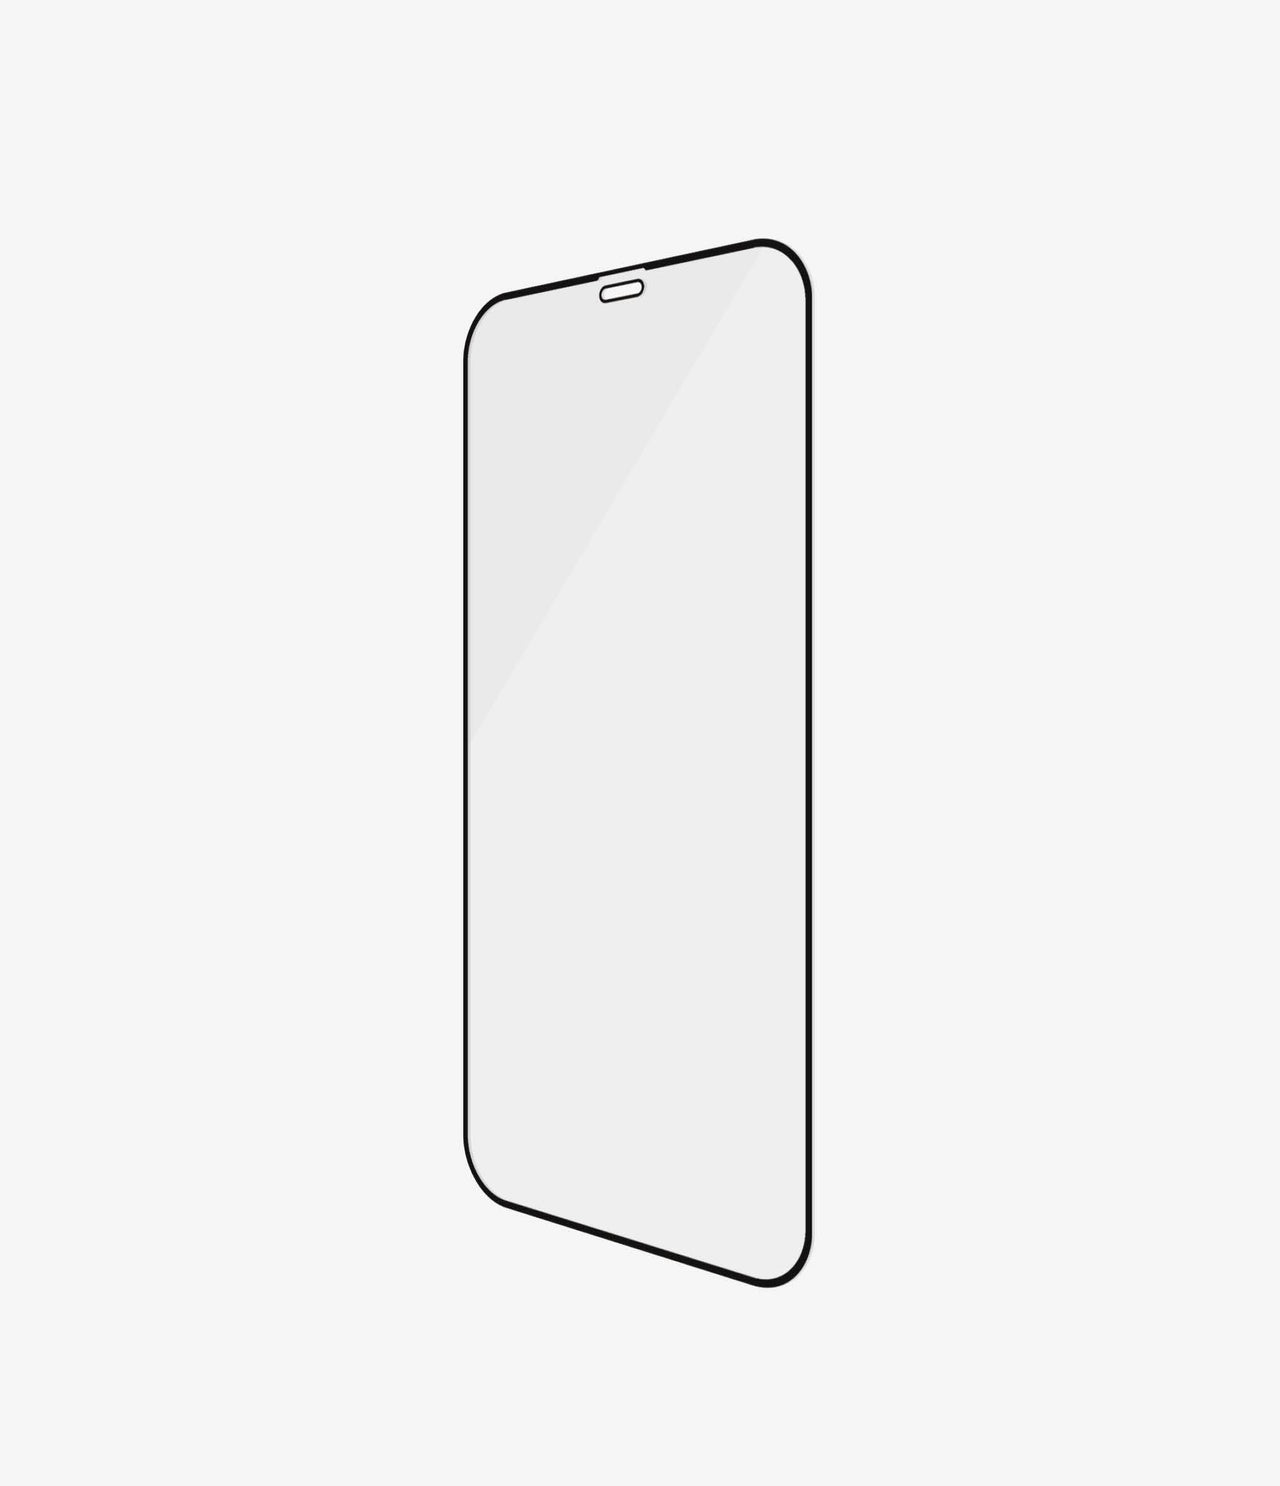 PanzerGlass Edge to Edge Glass Screen Protector for iPhone 12 Mini - Black